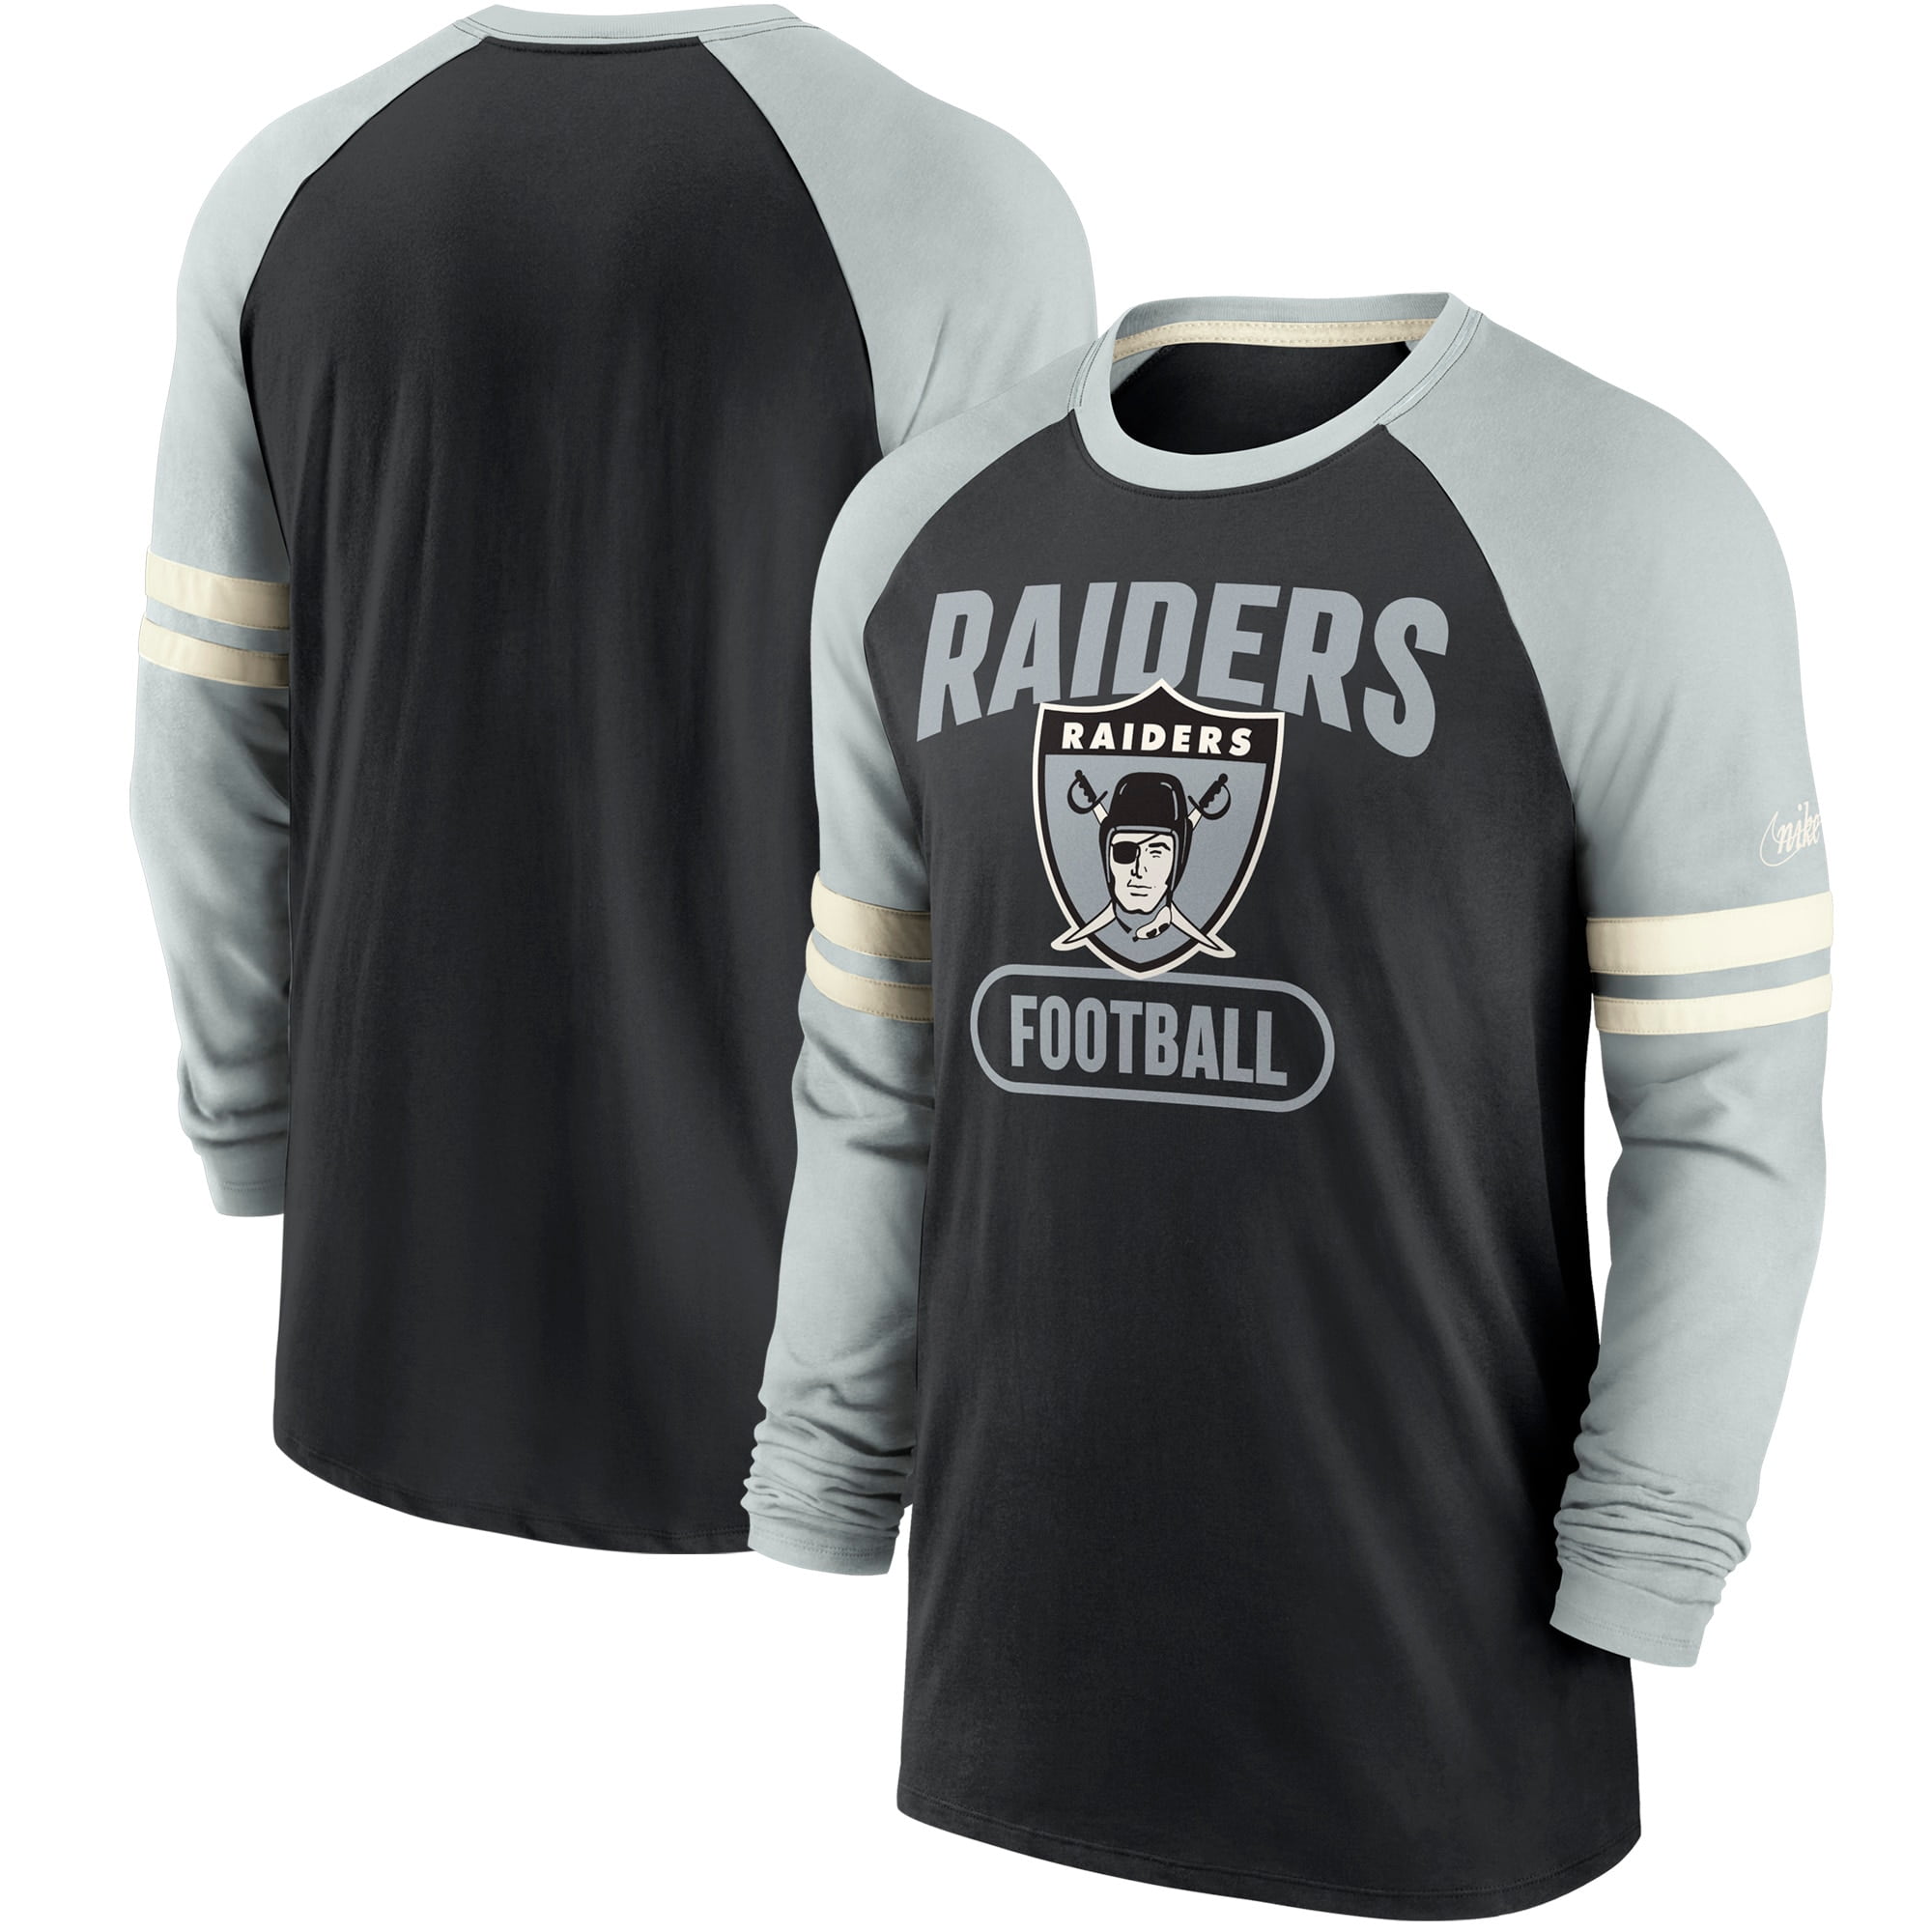 Oakland Raiders Youth (8-20) T-Shirt Long Sleeve Black